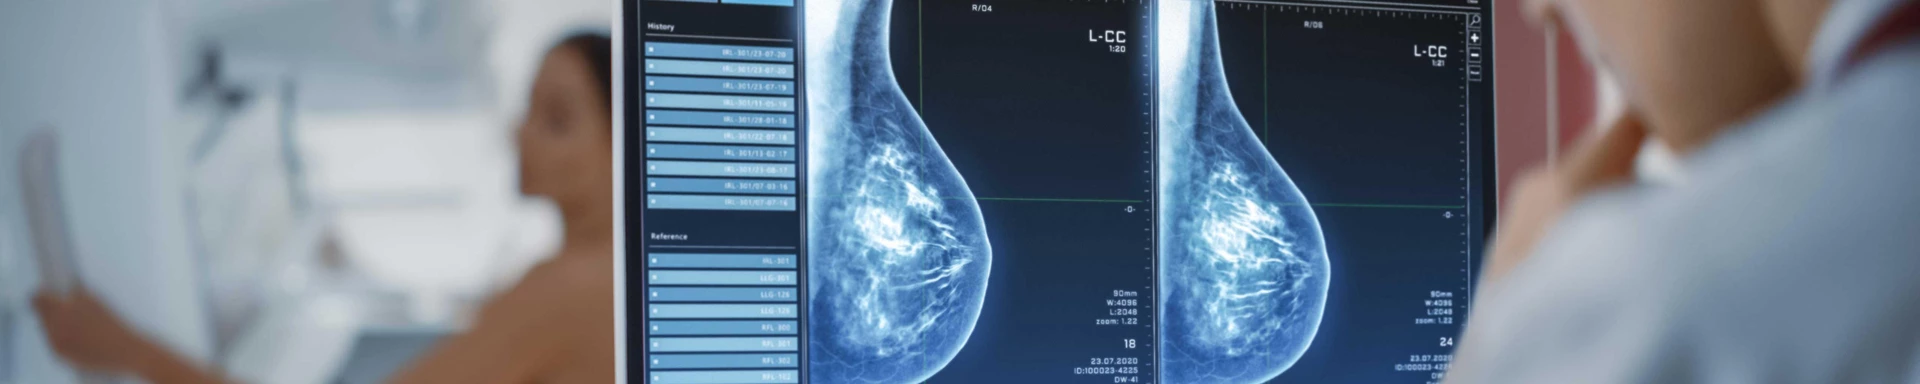 Mammographie 